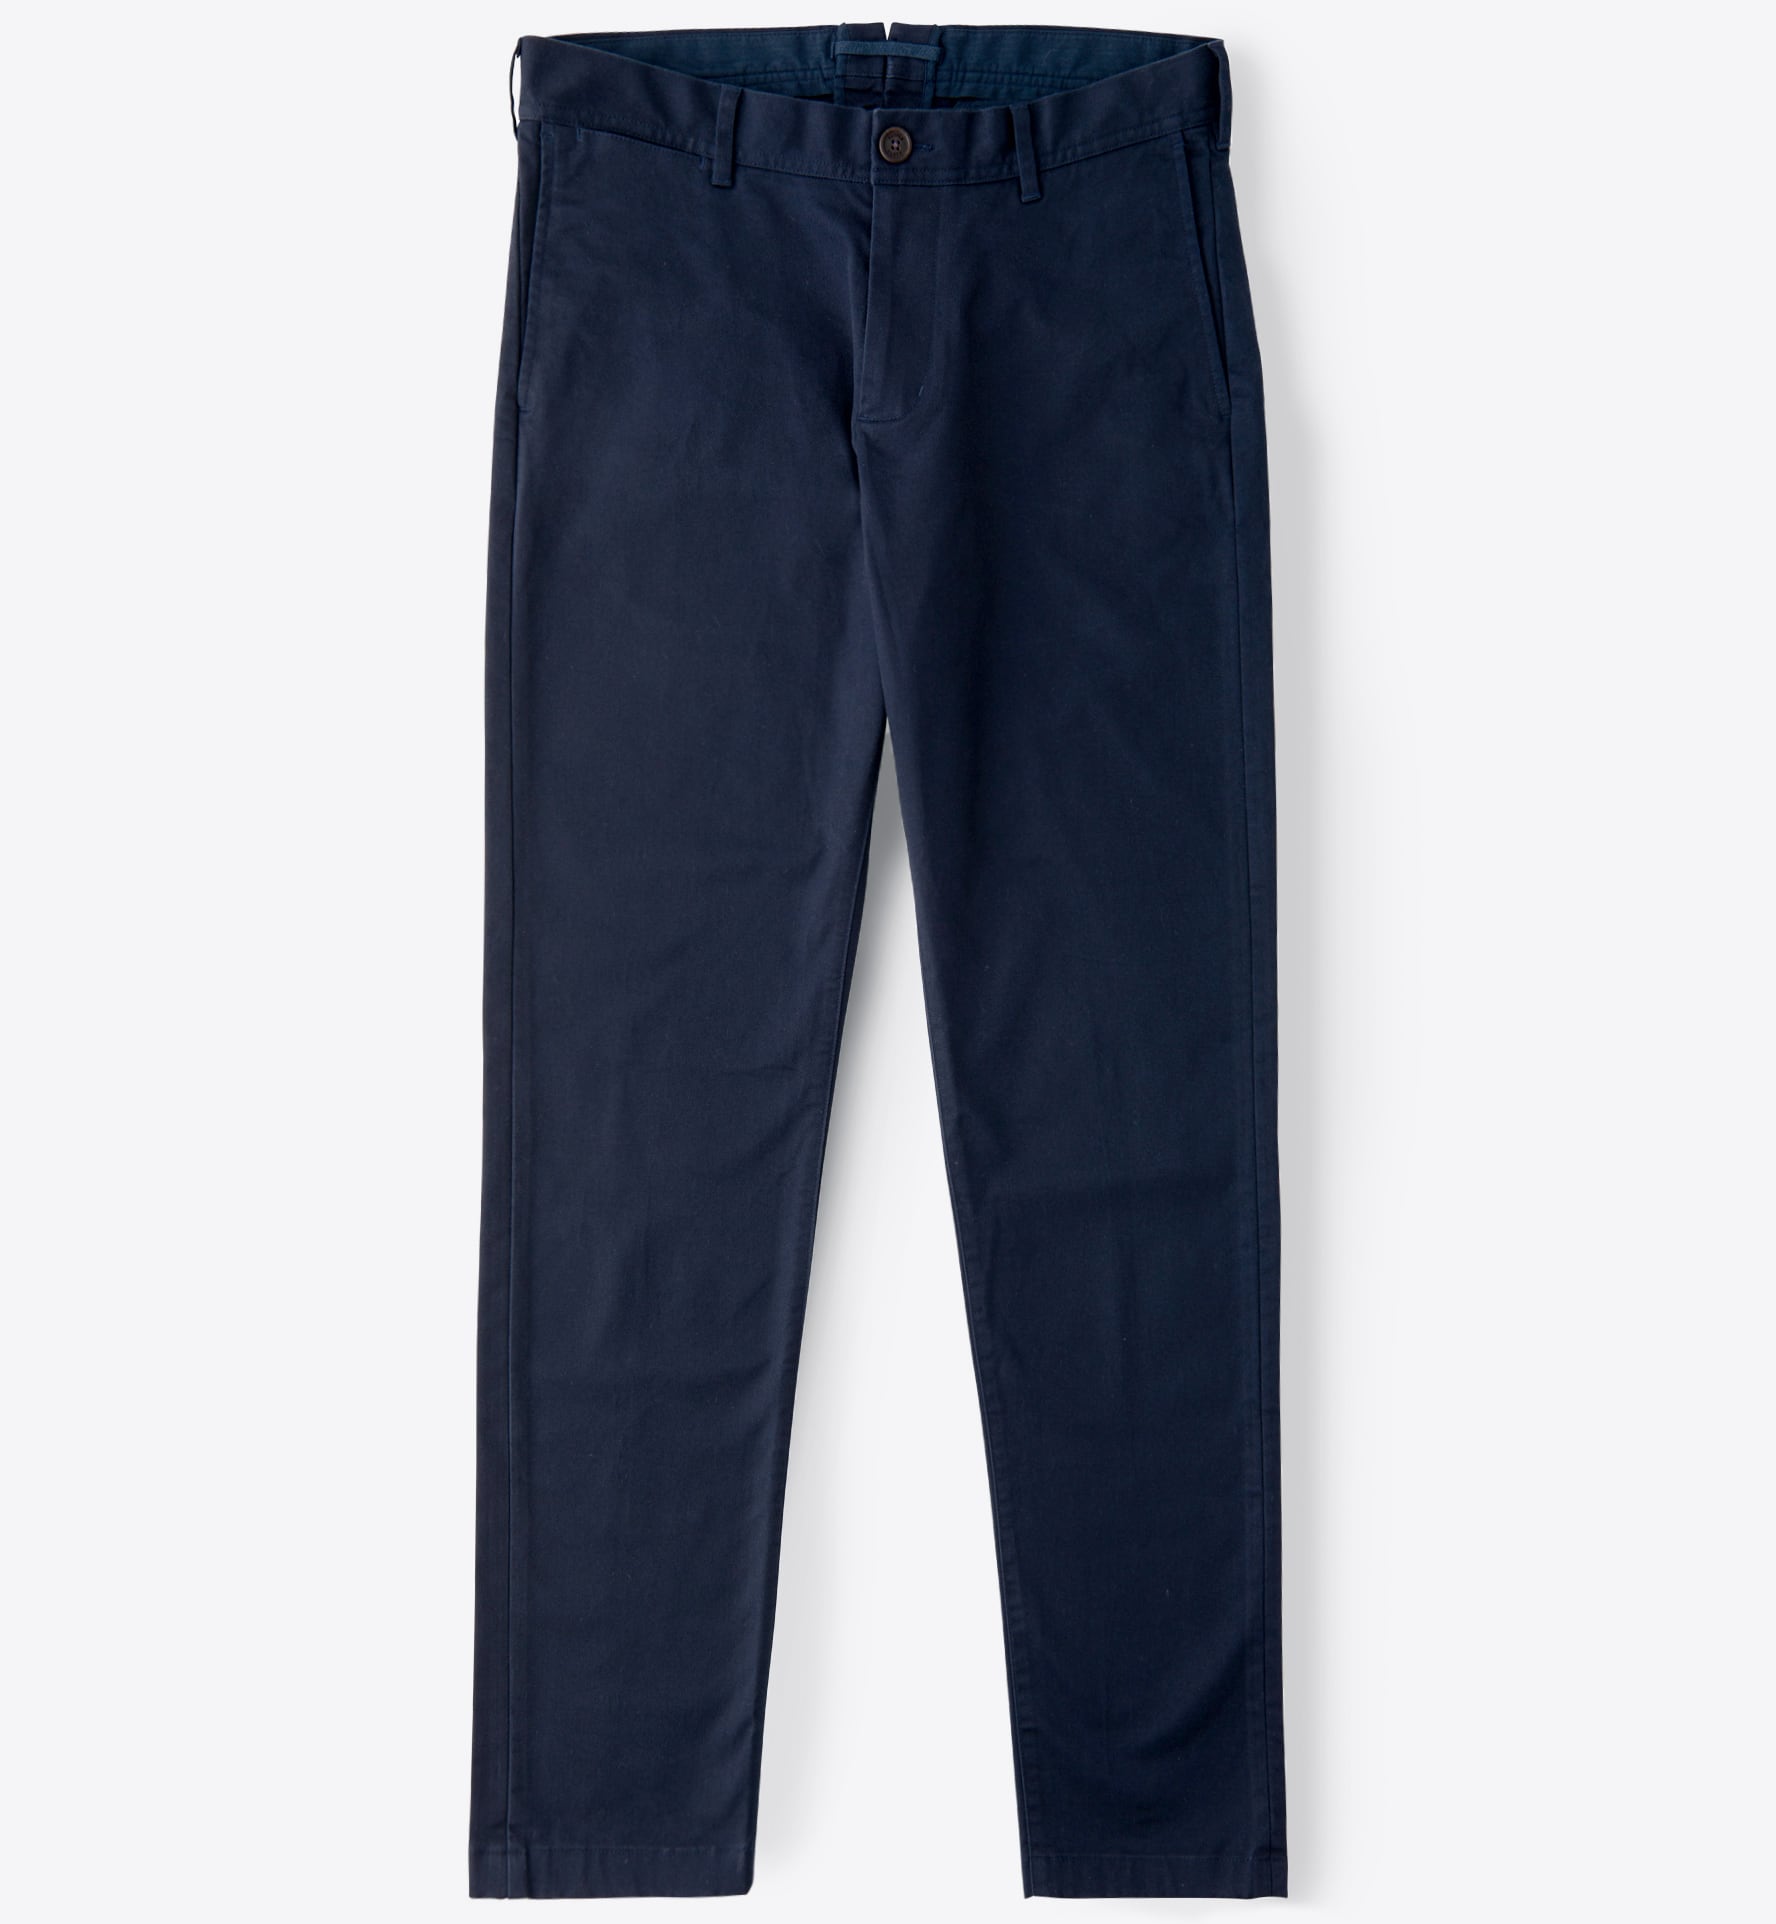 Bowery Navy Stretch Heavy Cotton Chino - Custom Fit Pants